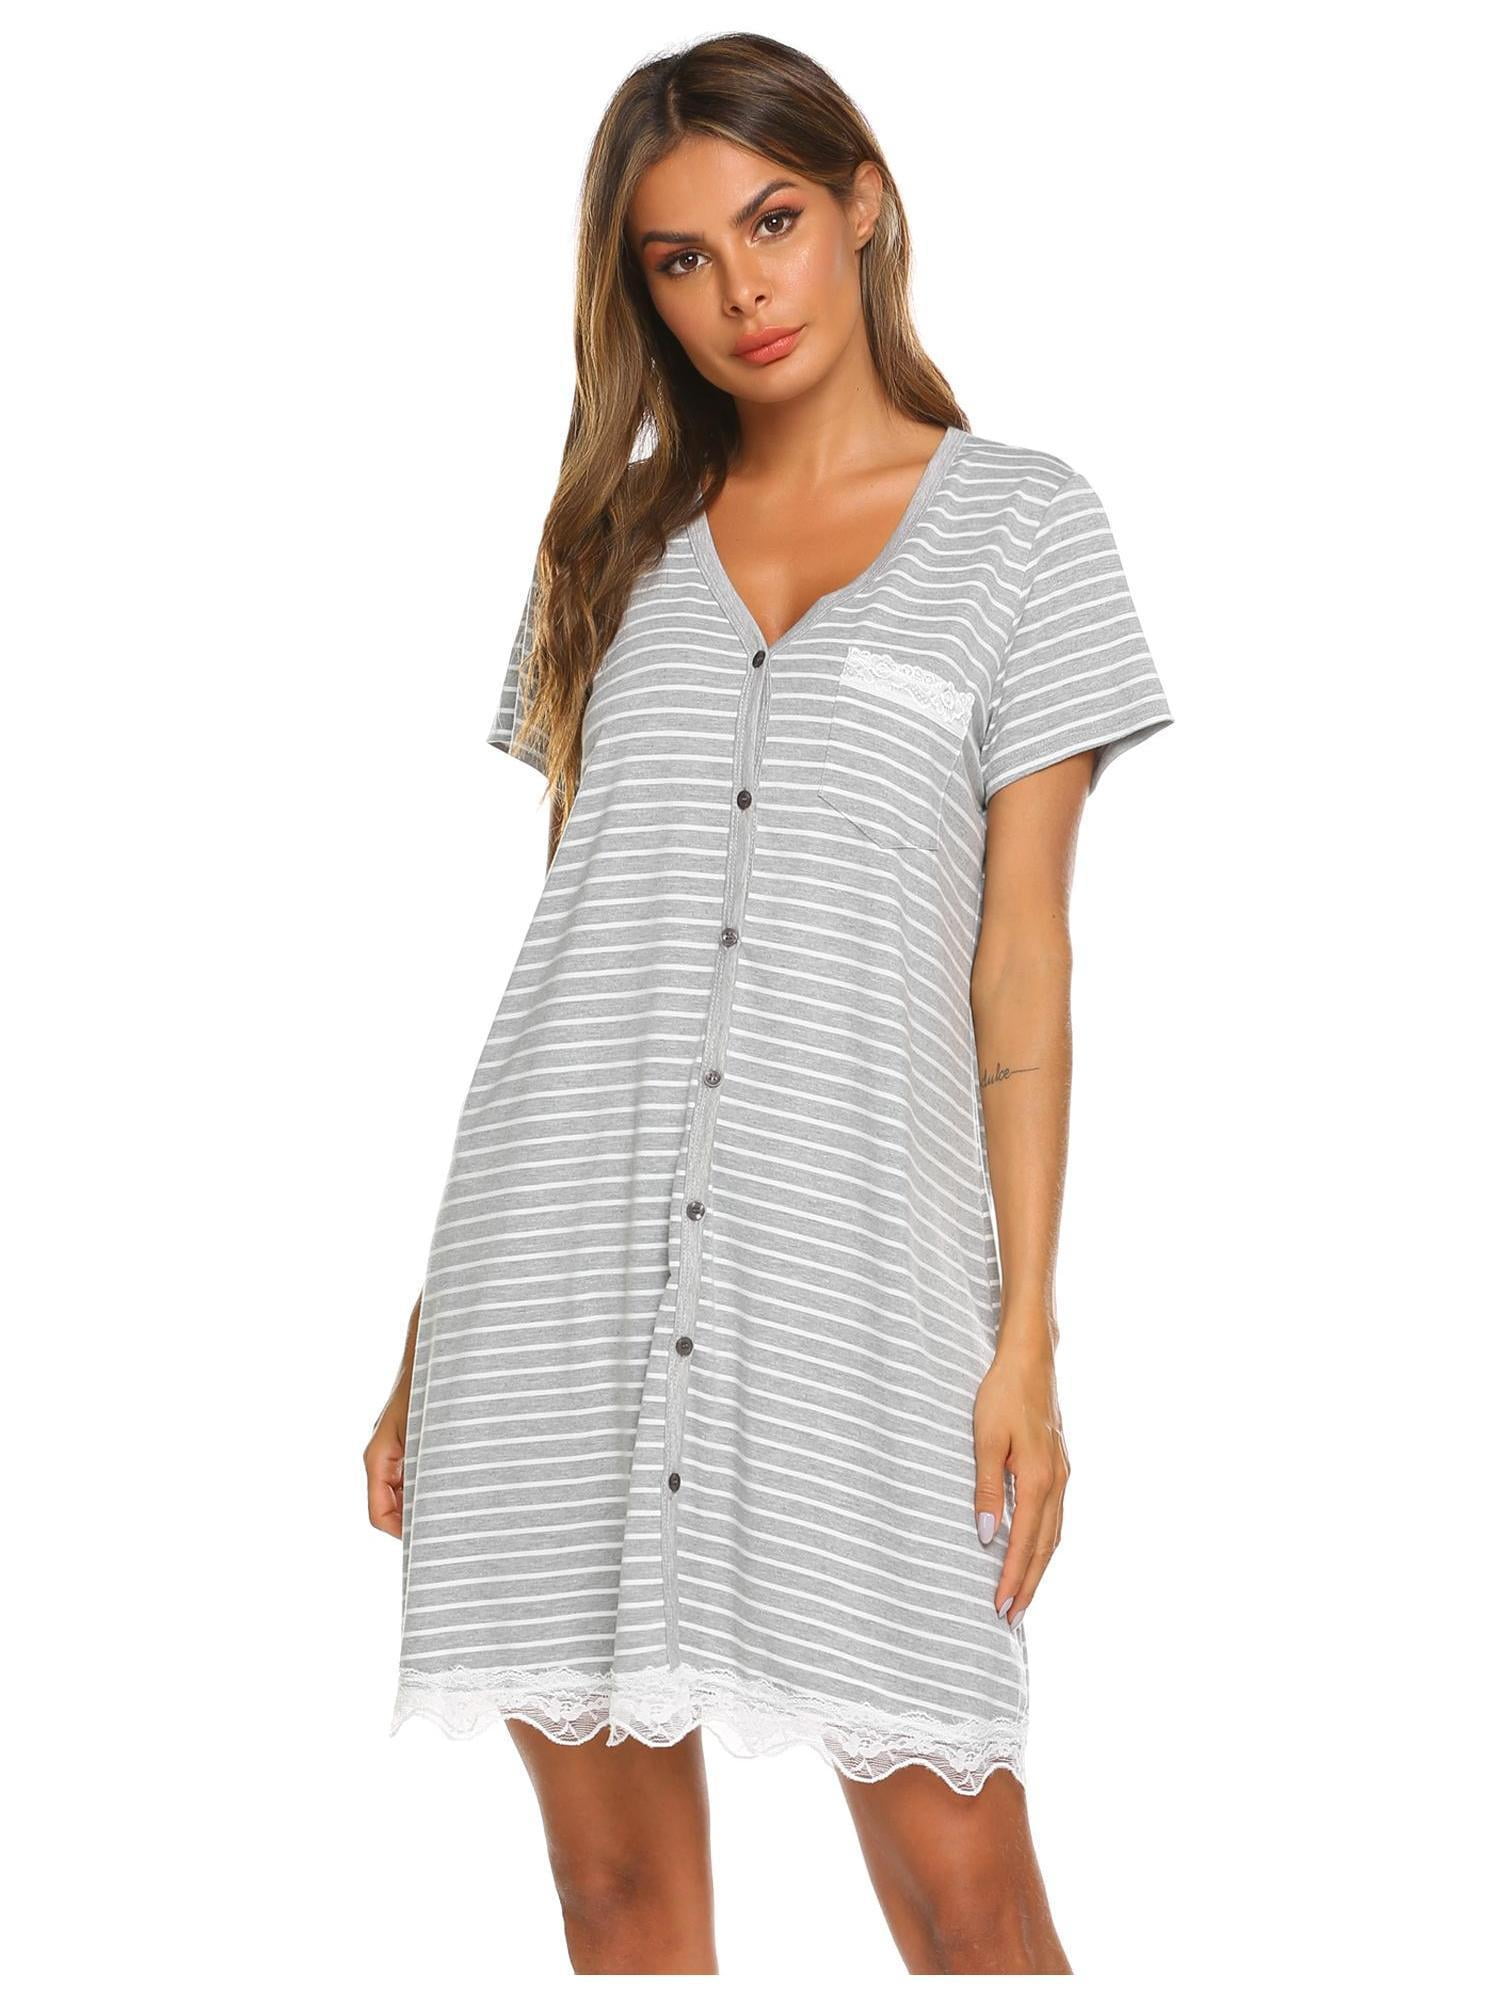 Ekouaer Women's Nightgown Striped Tee Short Sleeve Cotton Sleep Nightshirt Button Down Pajama Dress S-XXXL 